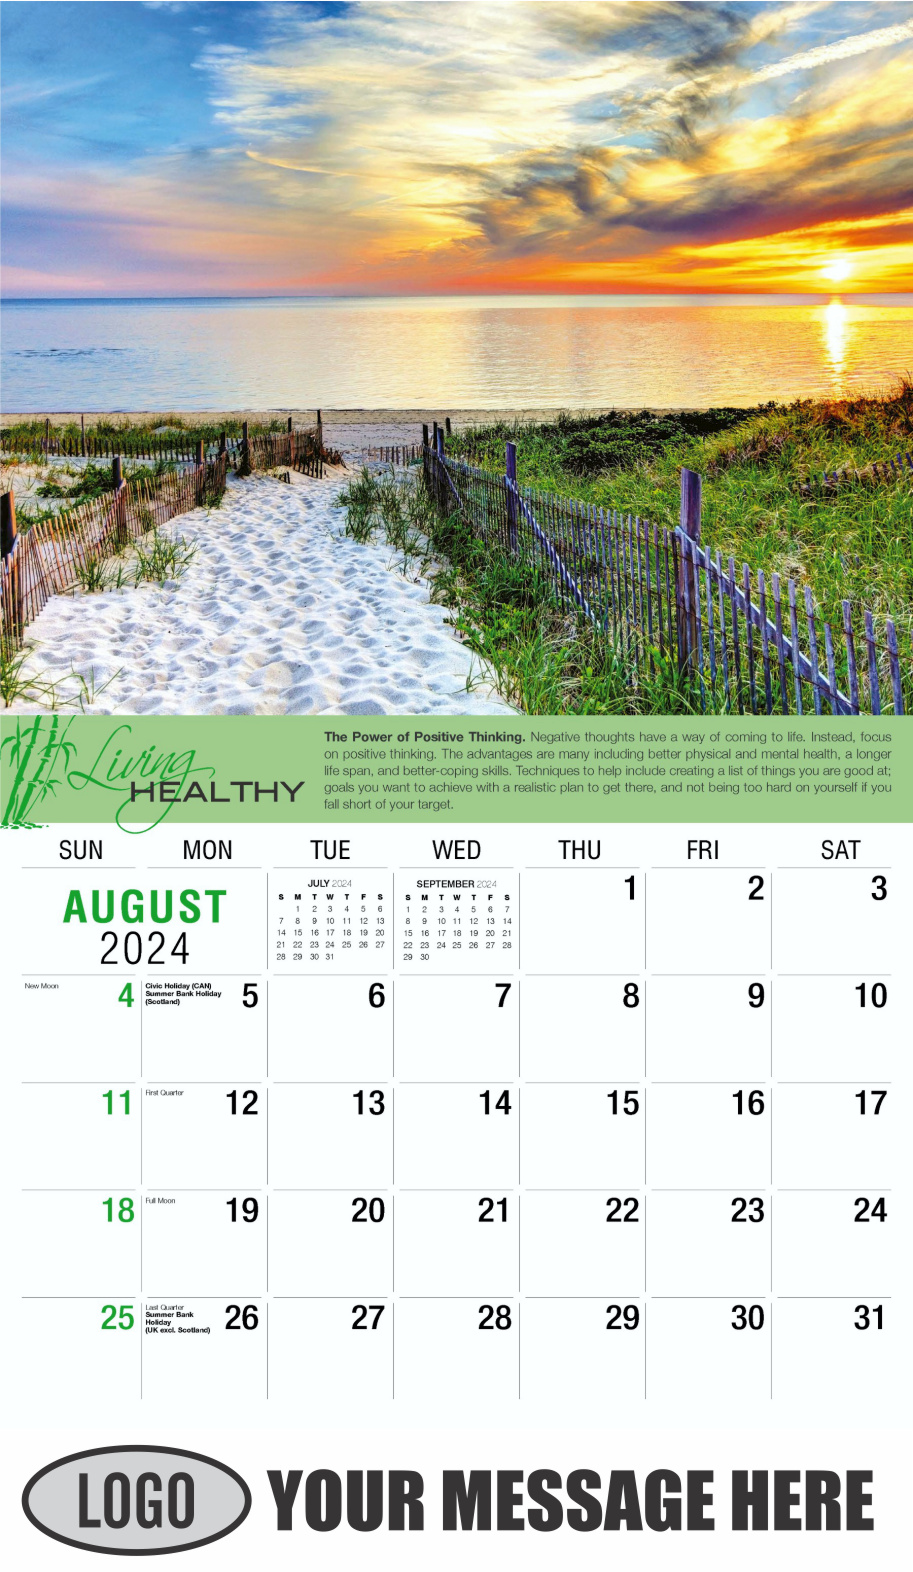 Living Healthy 2024 Business Promotional Calendar - August